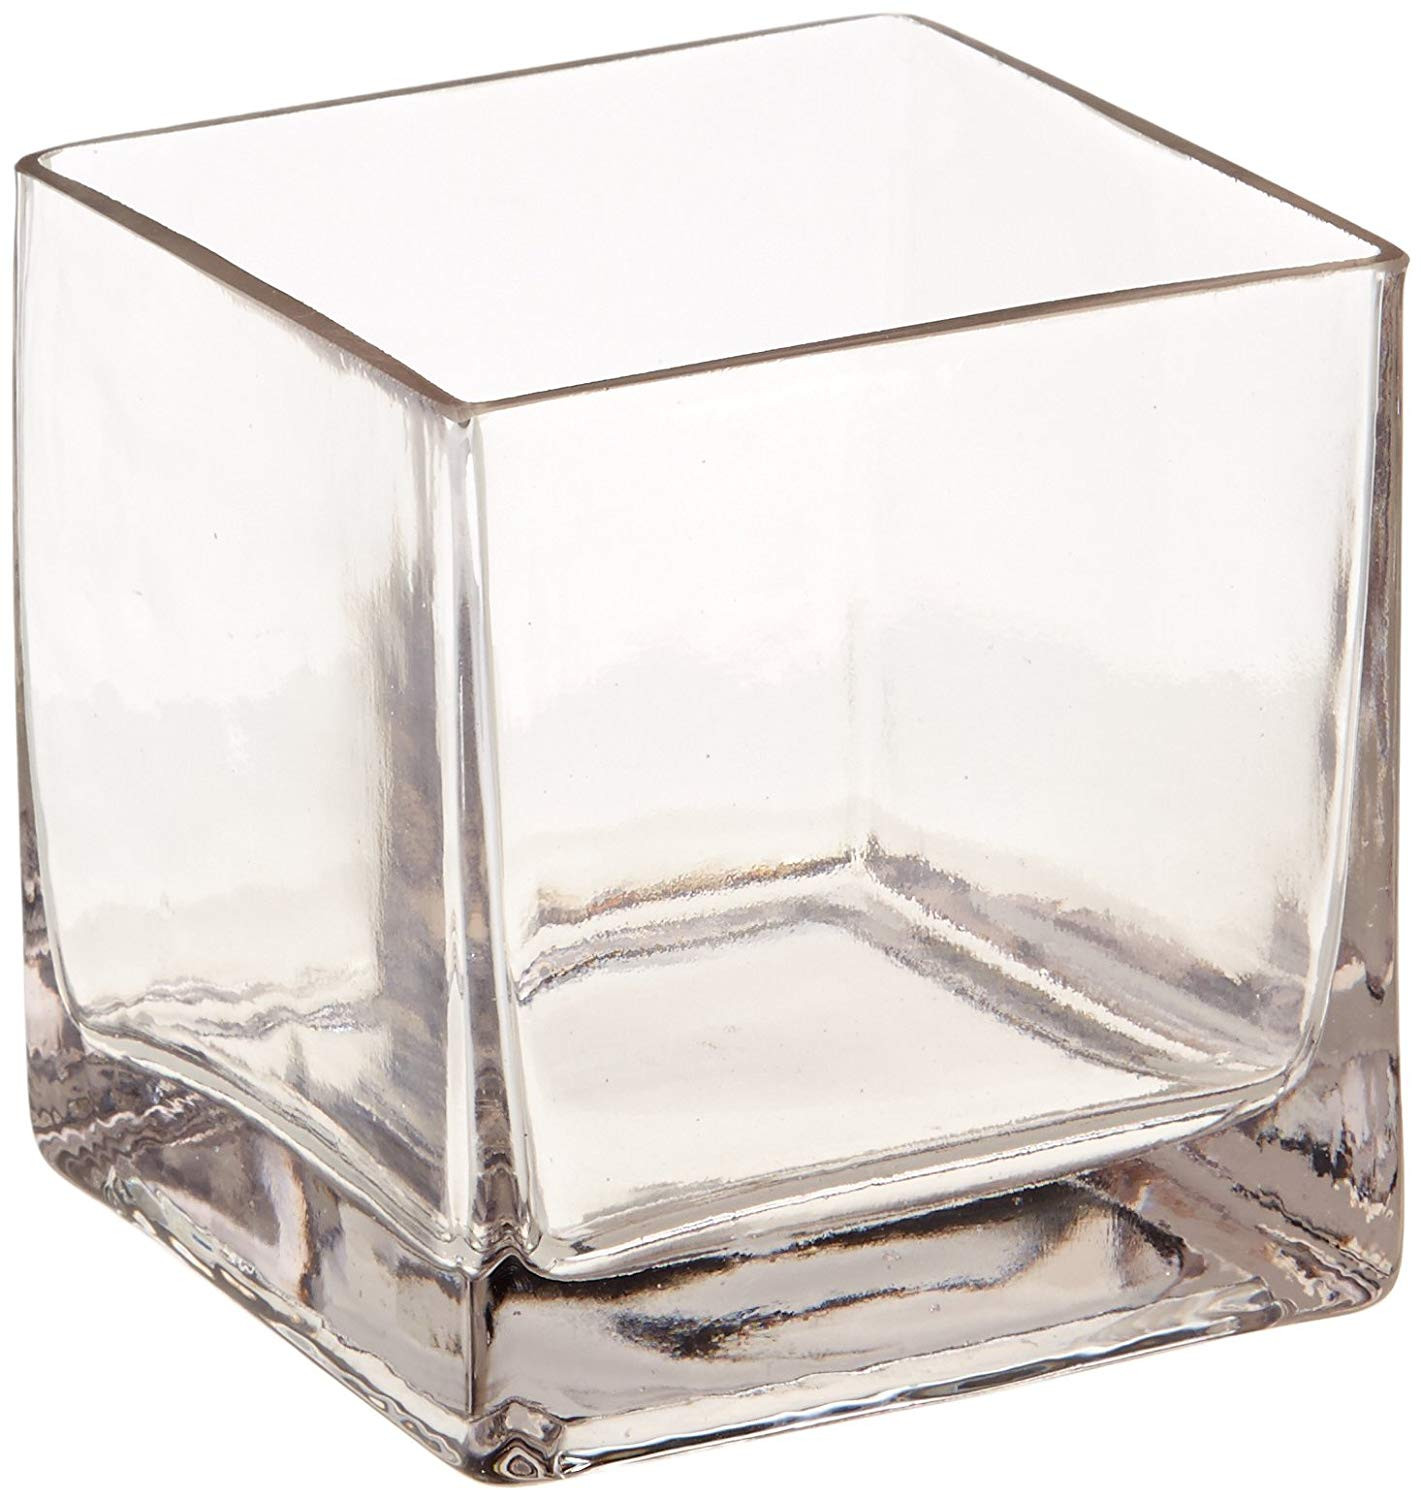 bulk glass vases for wedding of amazon com 12piece 4 square crystal clear glass vase home kitchen inside 71 jezfmvnl sl1500